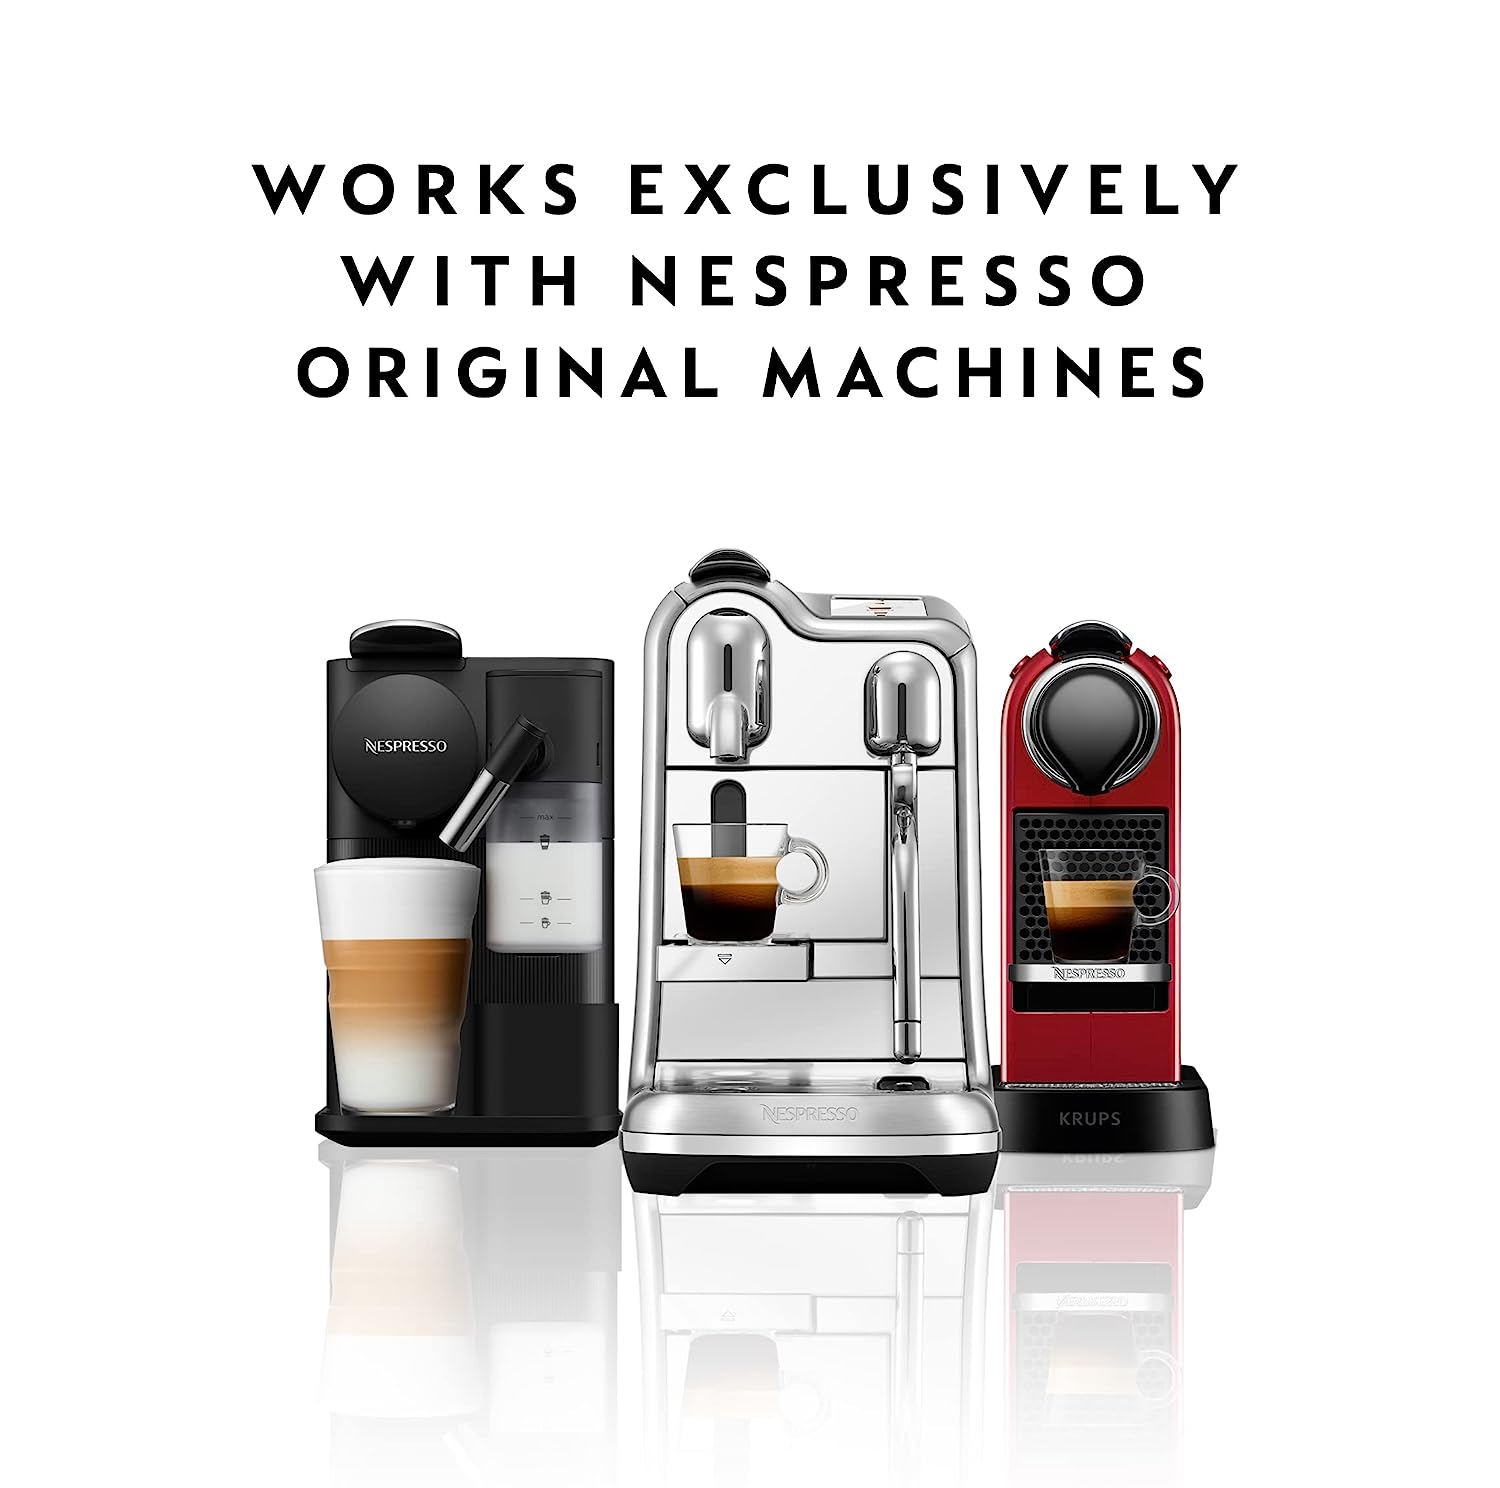 Nespresso Capsules OriginalLine, Ispirazione Arpeggio Intenso, Dark Roast Coffee, Coffee Pods, Brews 1.35oz (ORIGINALLINE ONLY), 10 Count (Pack of 5)